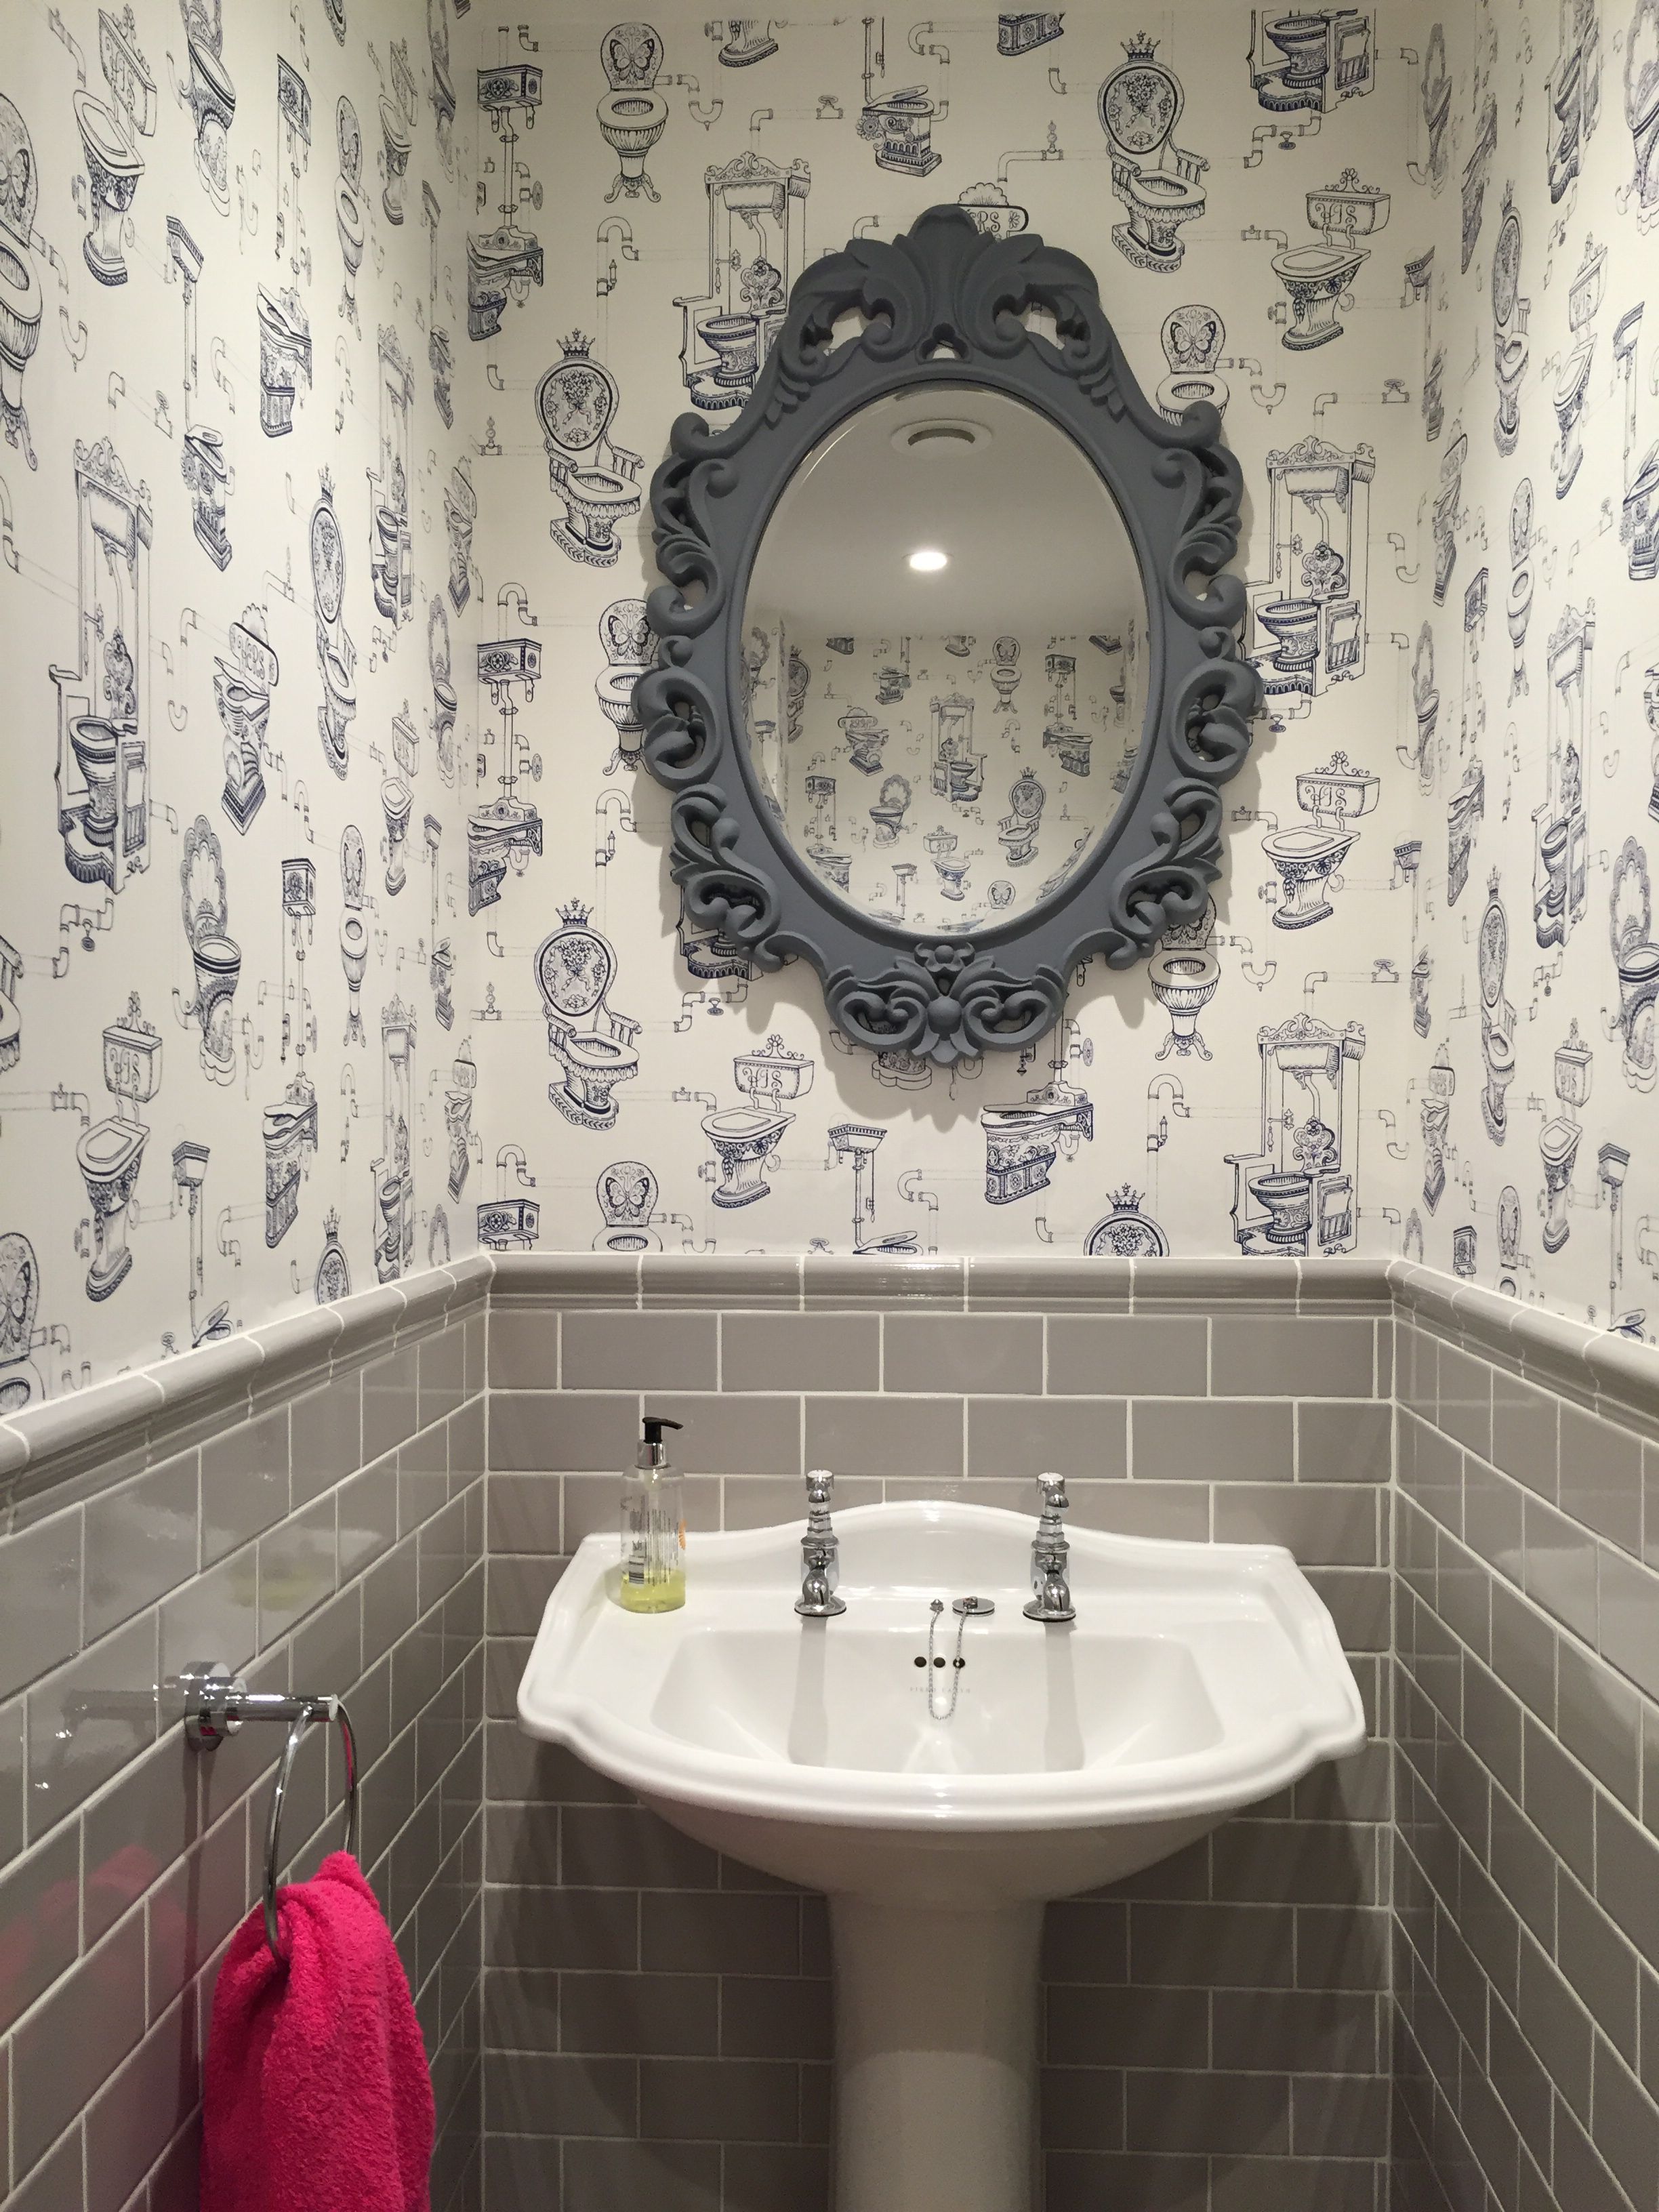 Downstairs Toilet Wallpaper Ideas - HD Wallpaper 